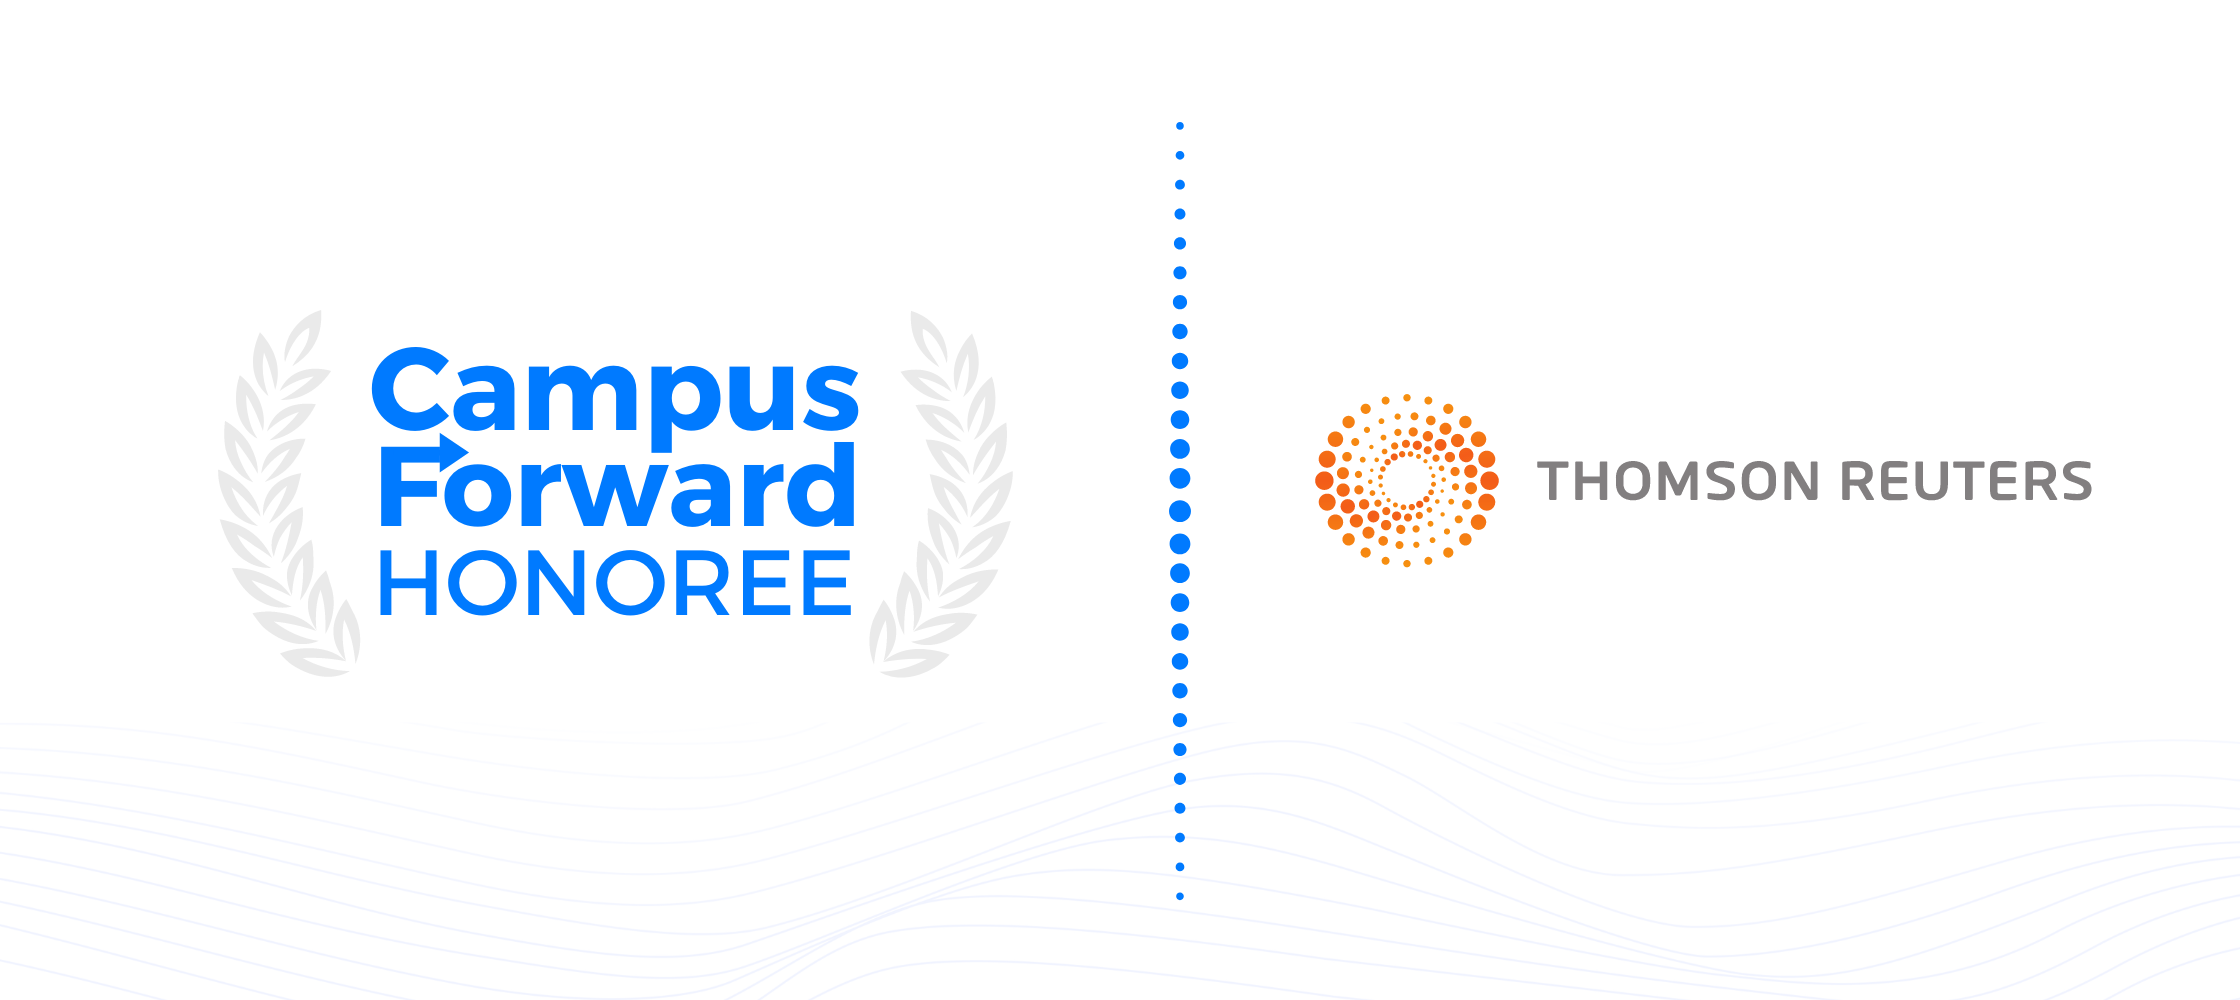 Campus Forward Honoree - Thomson Reuters